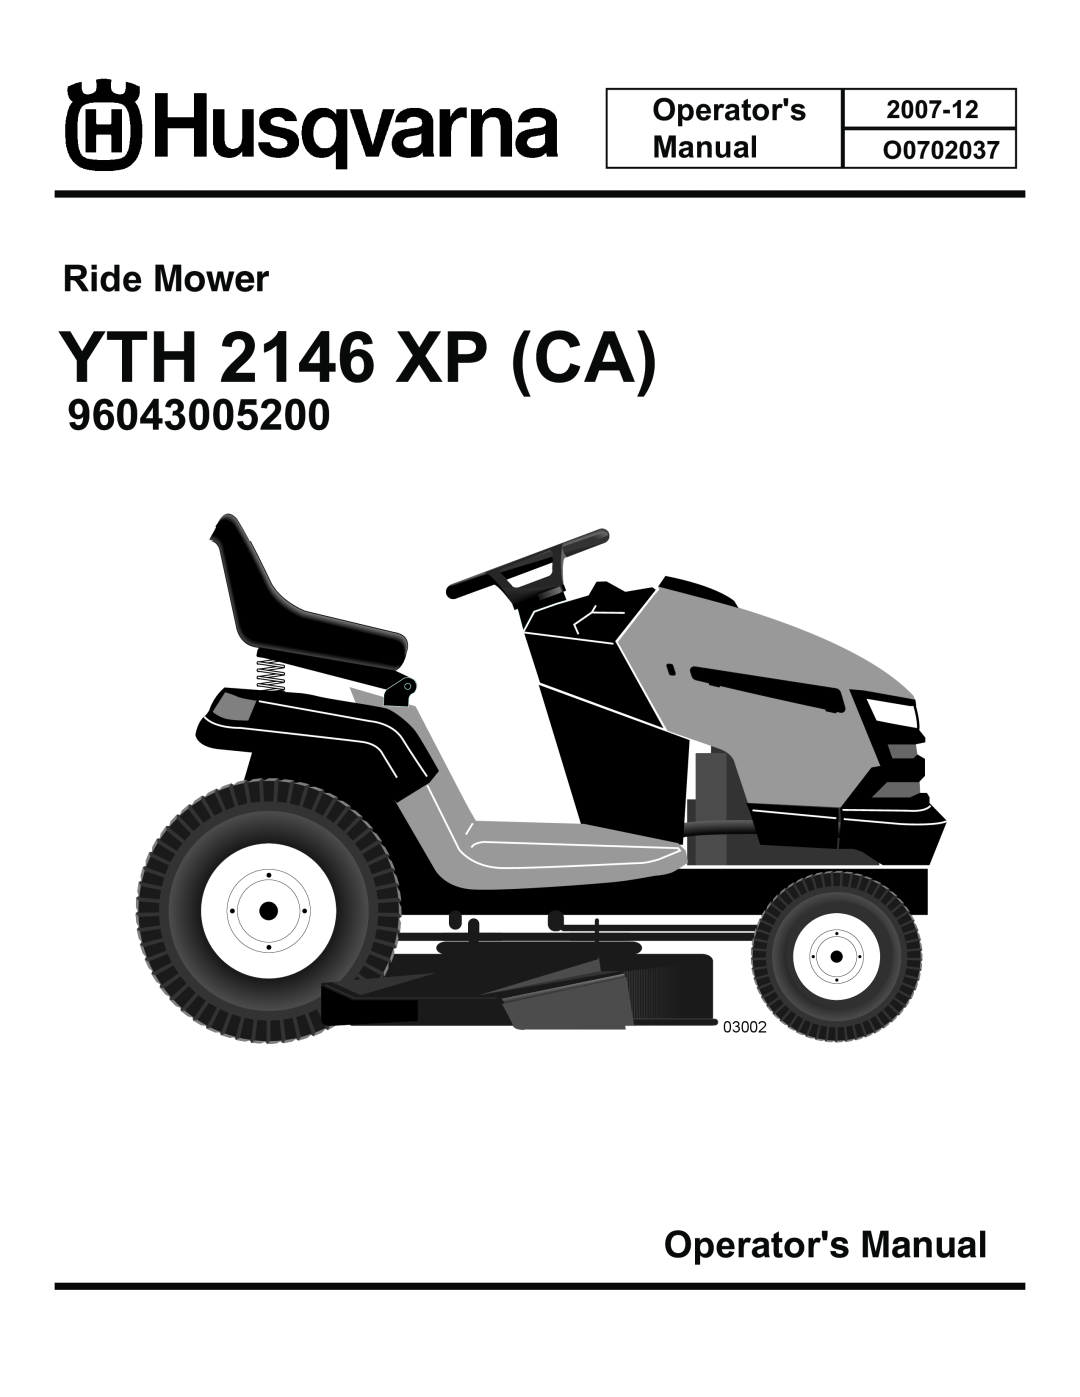 Husqvarna 96043005200 manual YTH 2146 XP CA, Ride Mower, Operators Manual, 2007-12 O0702037, 03002 